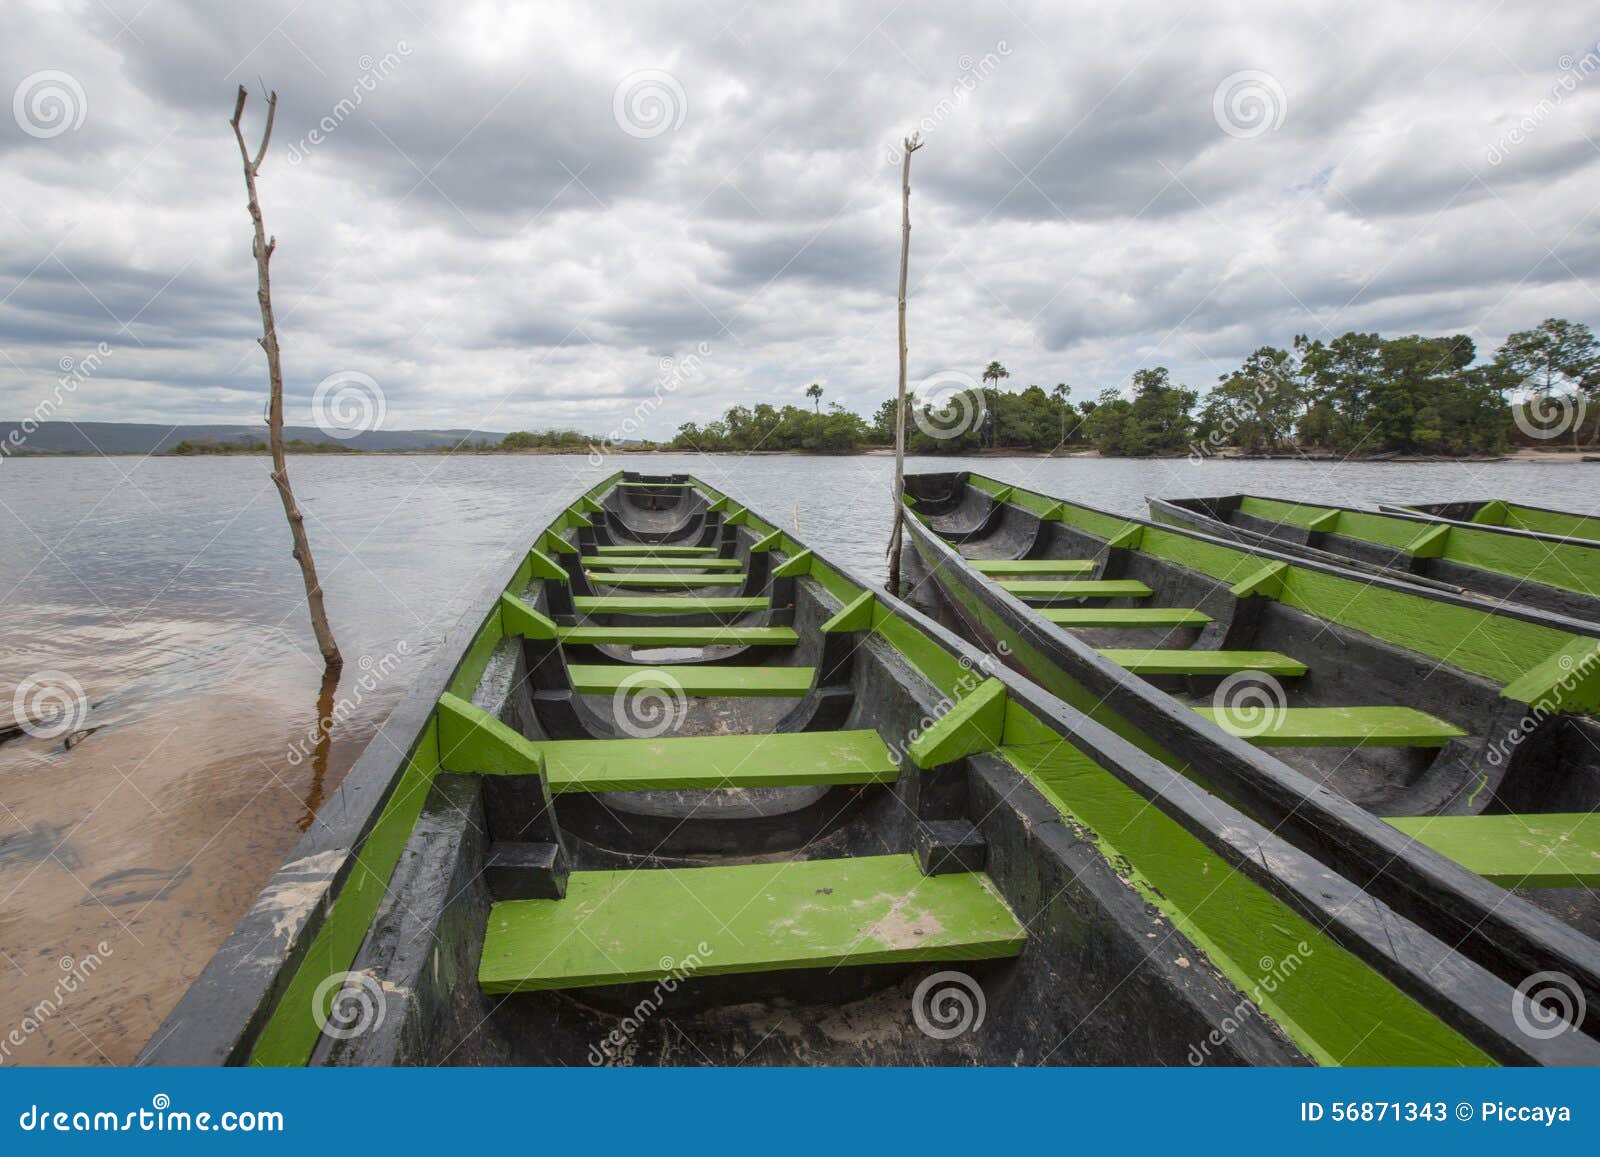 ucaima port and boats on carrao river, venezuela